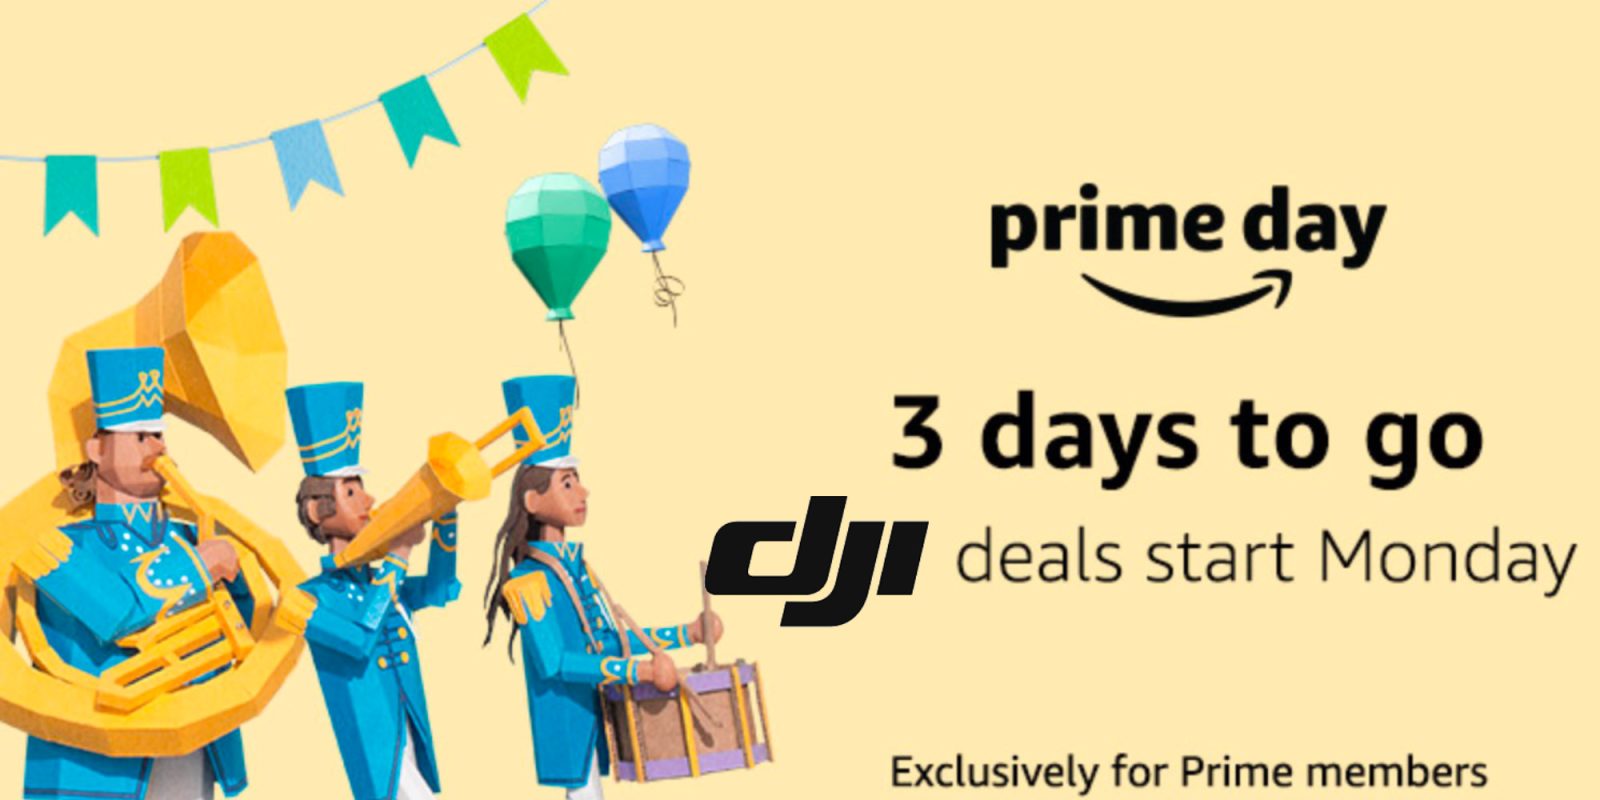 Best-DJI-deals-on-Amazon-Prime-Day-2019.jpg